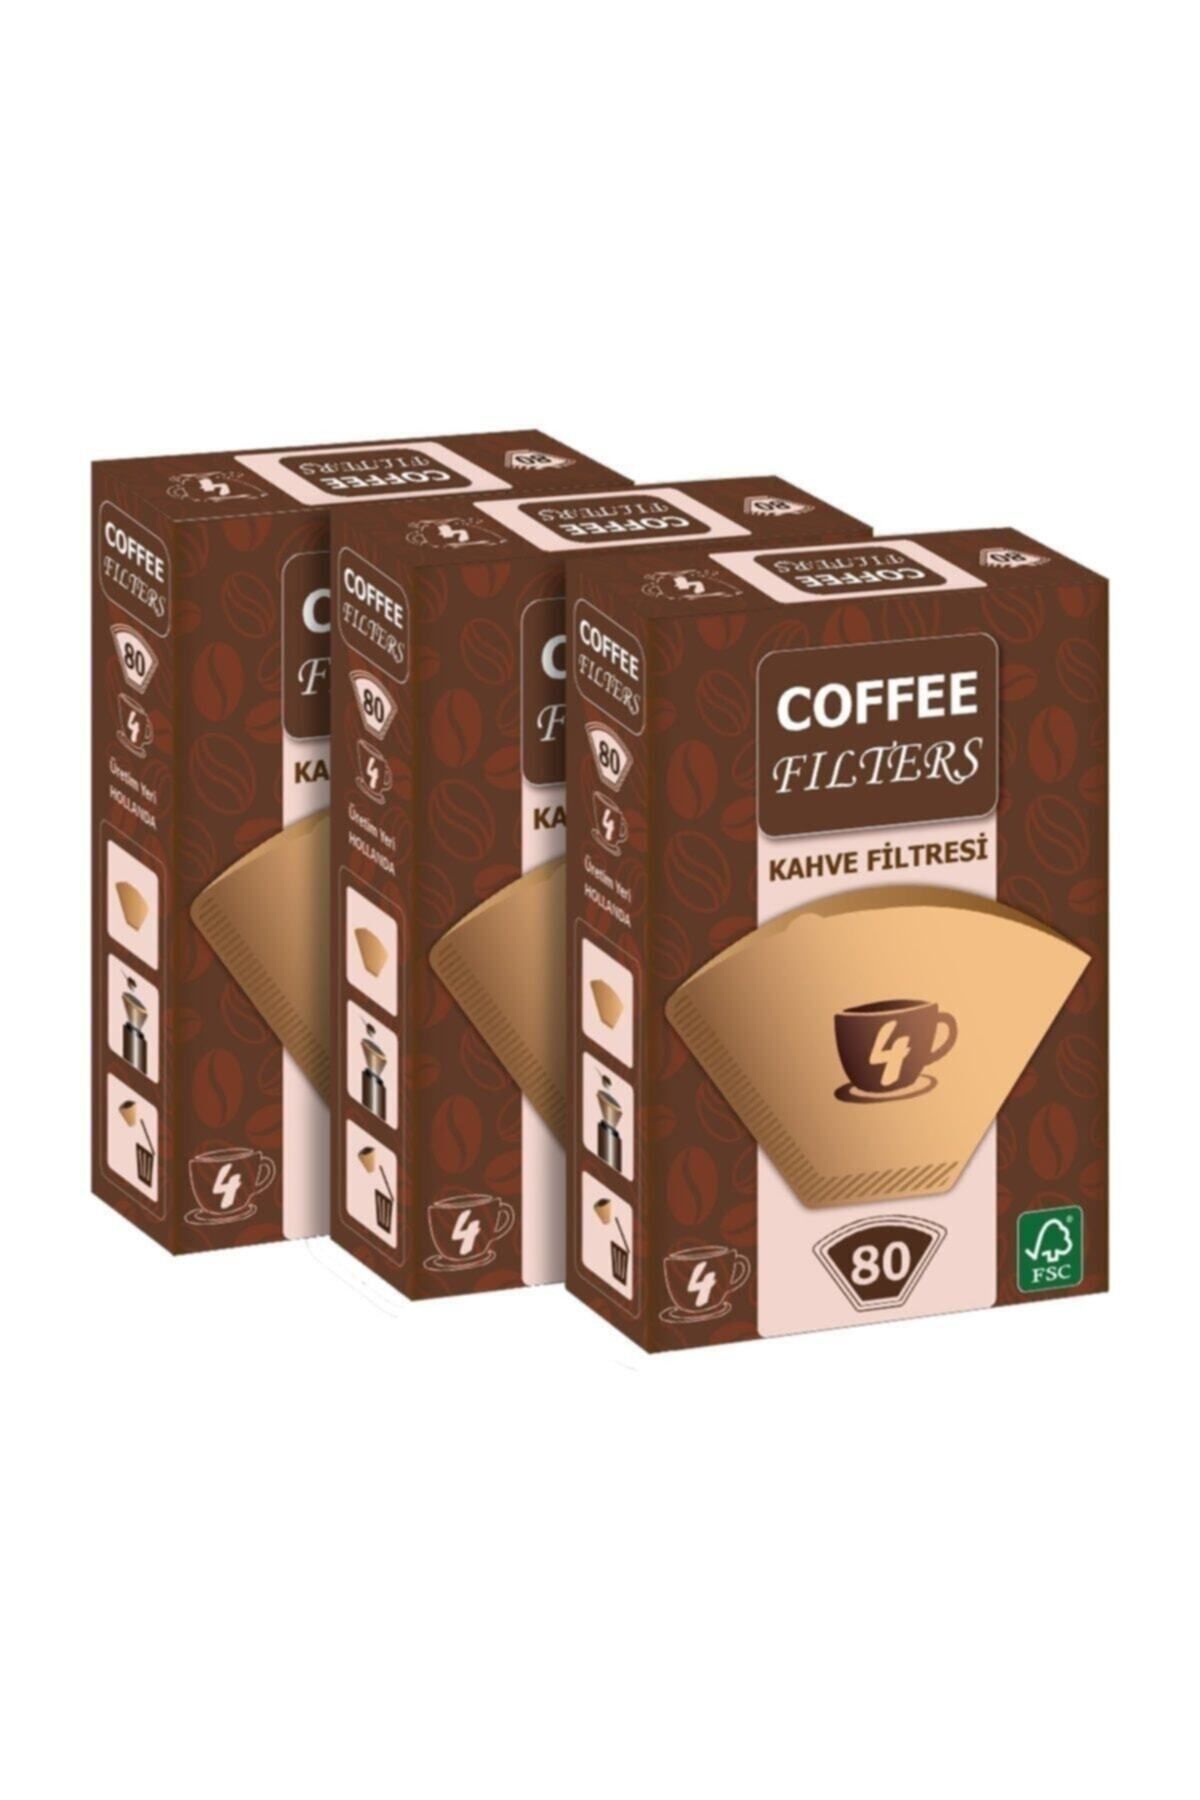 Coffee Filters Filtre Kahve Kağıdı 1/4 80'li 3 Paket 240 Adet